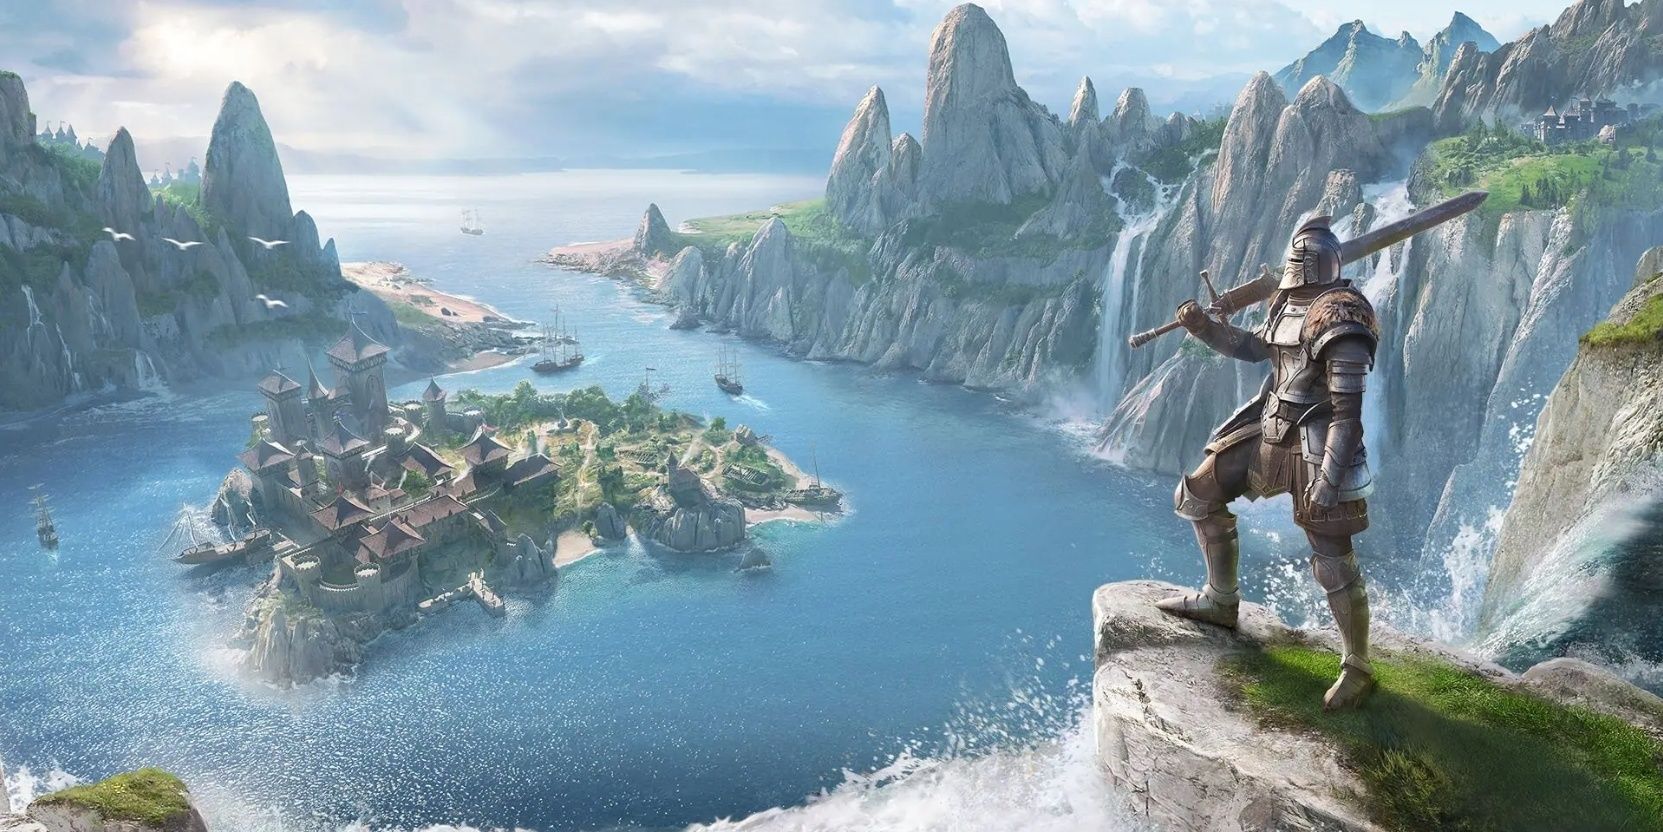 Official artwork for The Elder Scrolls Online High Isle update